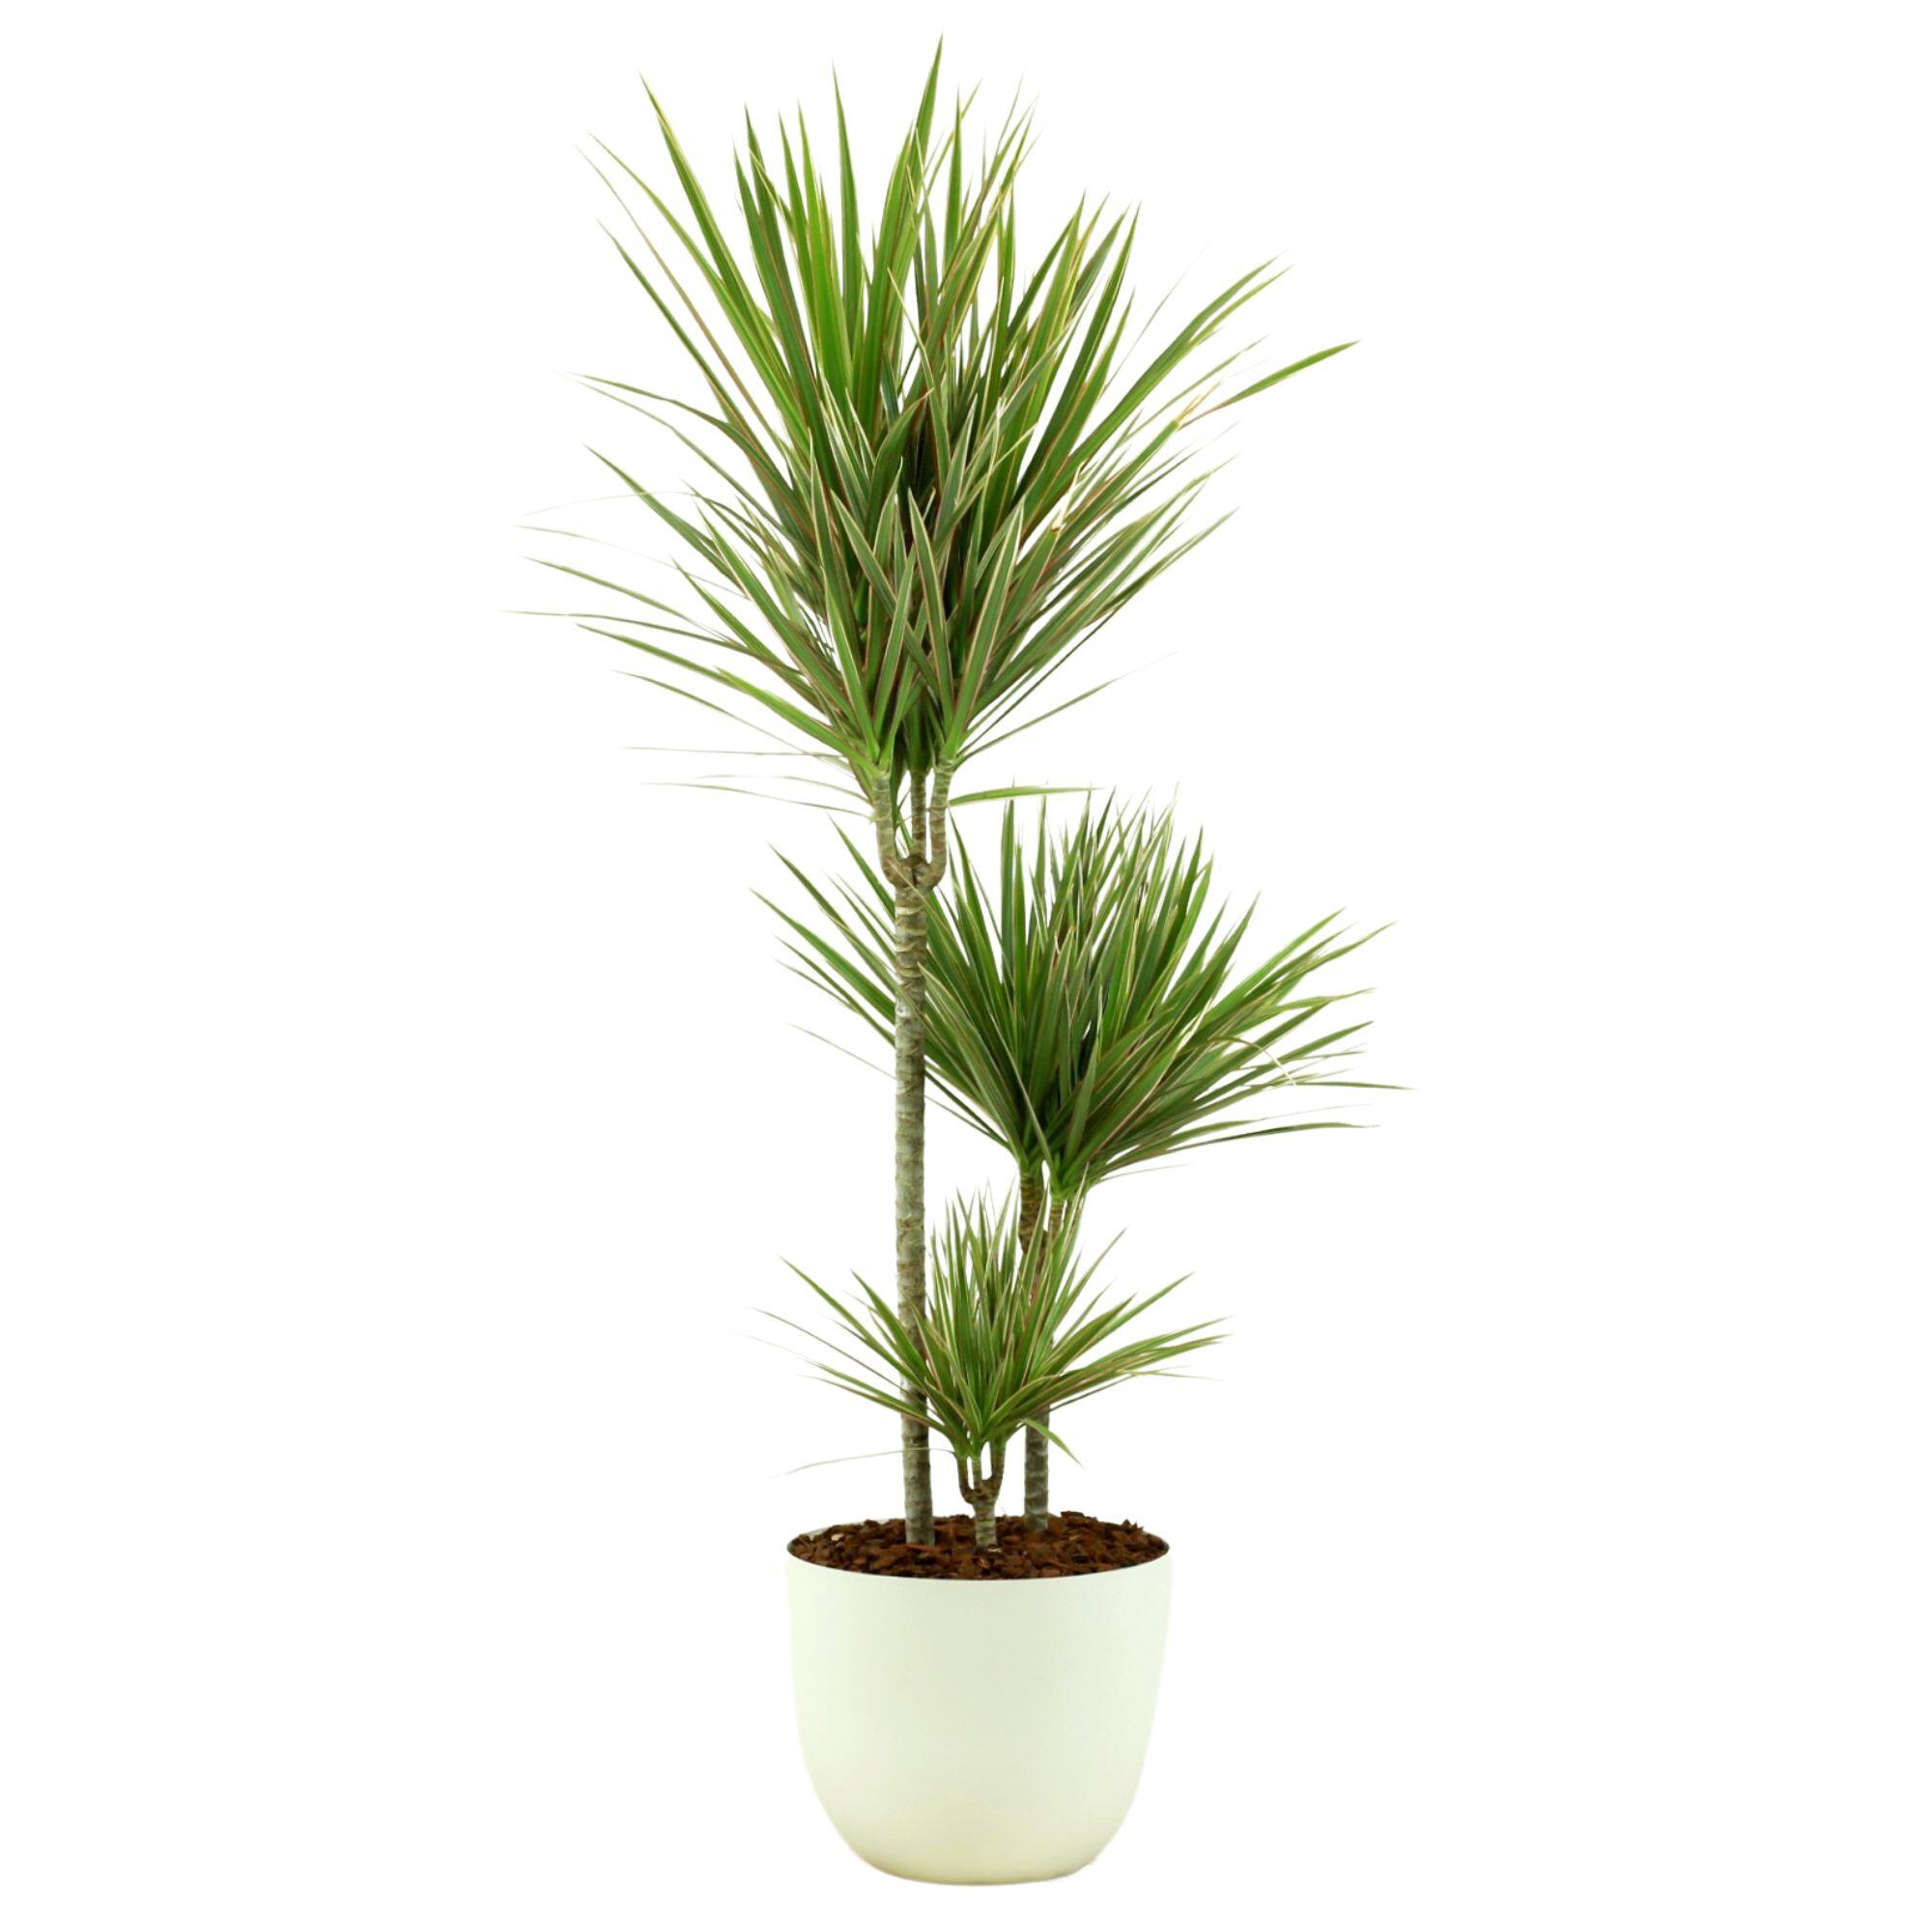 Planta verde dracaena marginata 110-120 cm en maceta havana blanca de 24 cm